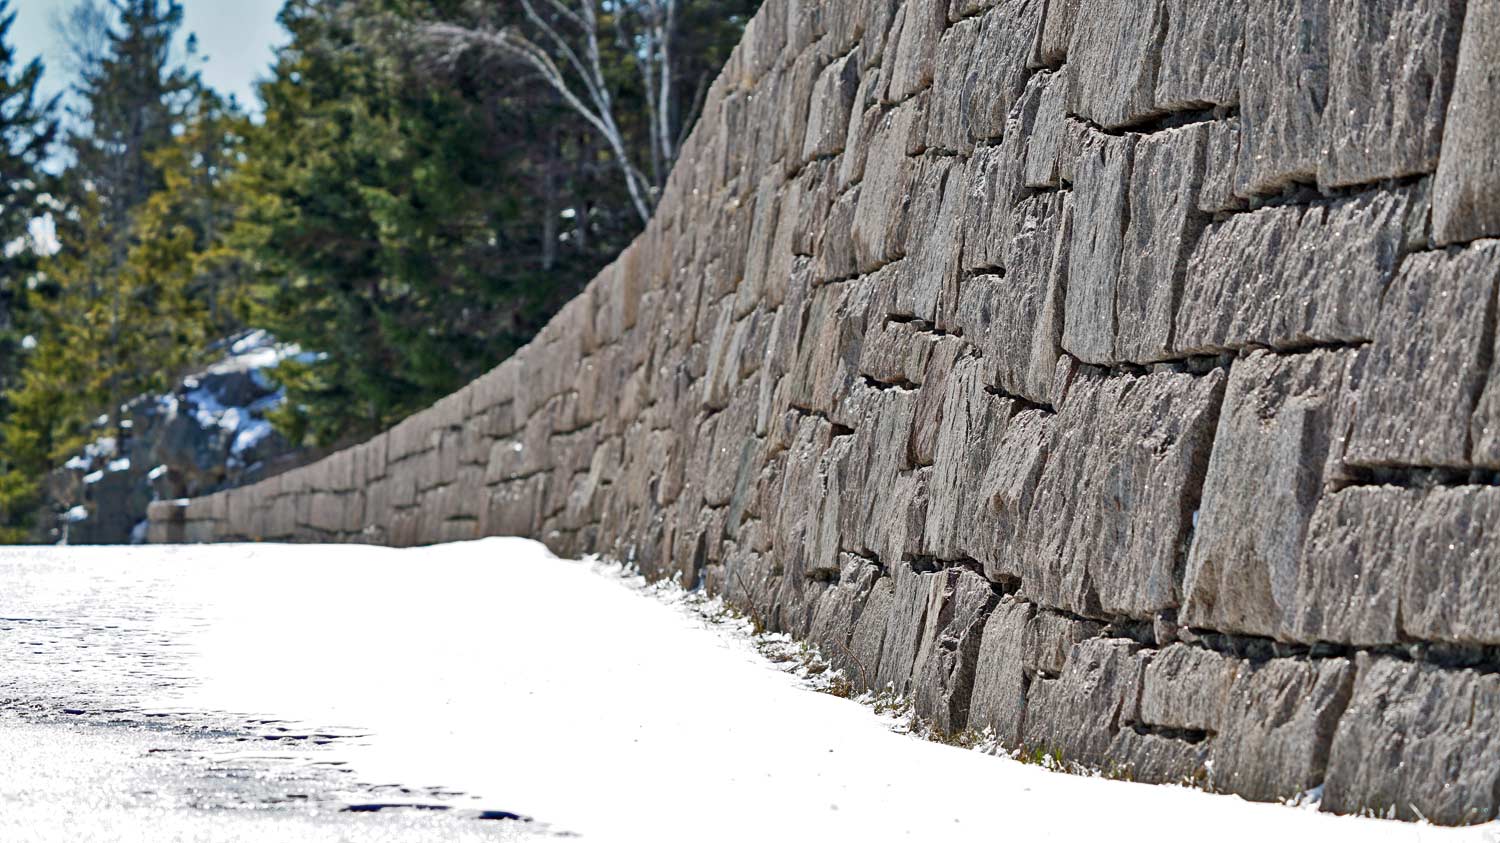 acadia stone work walls